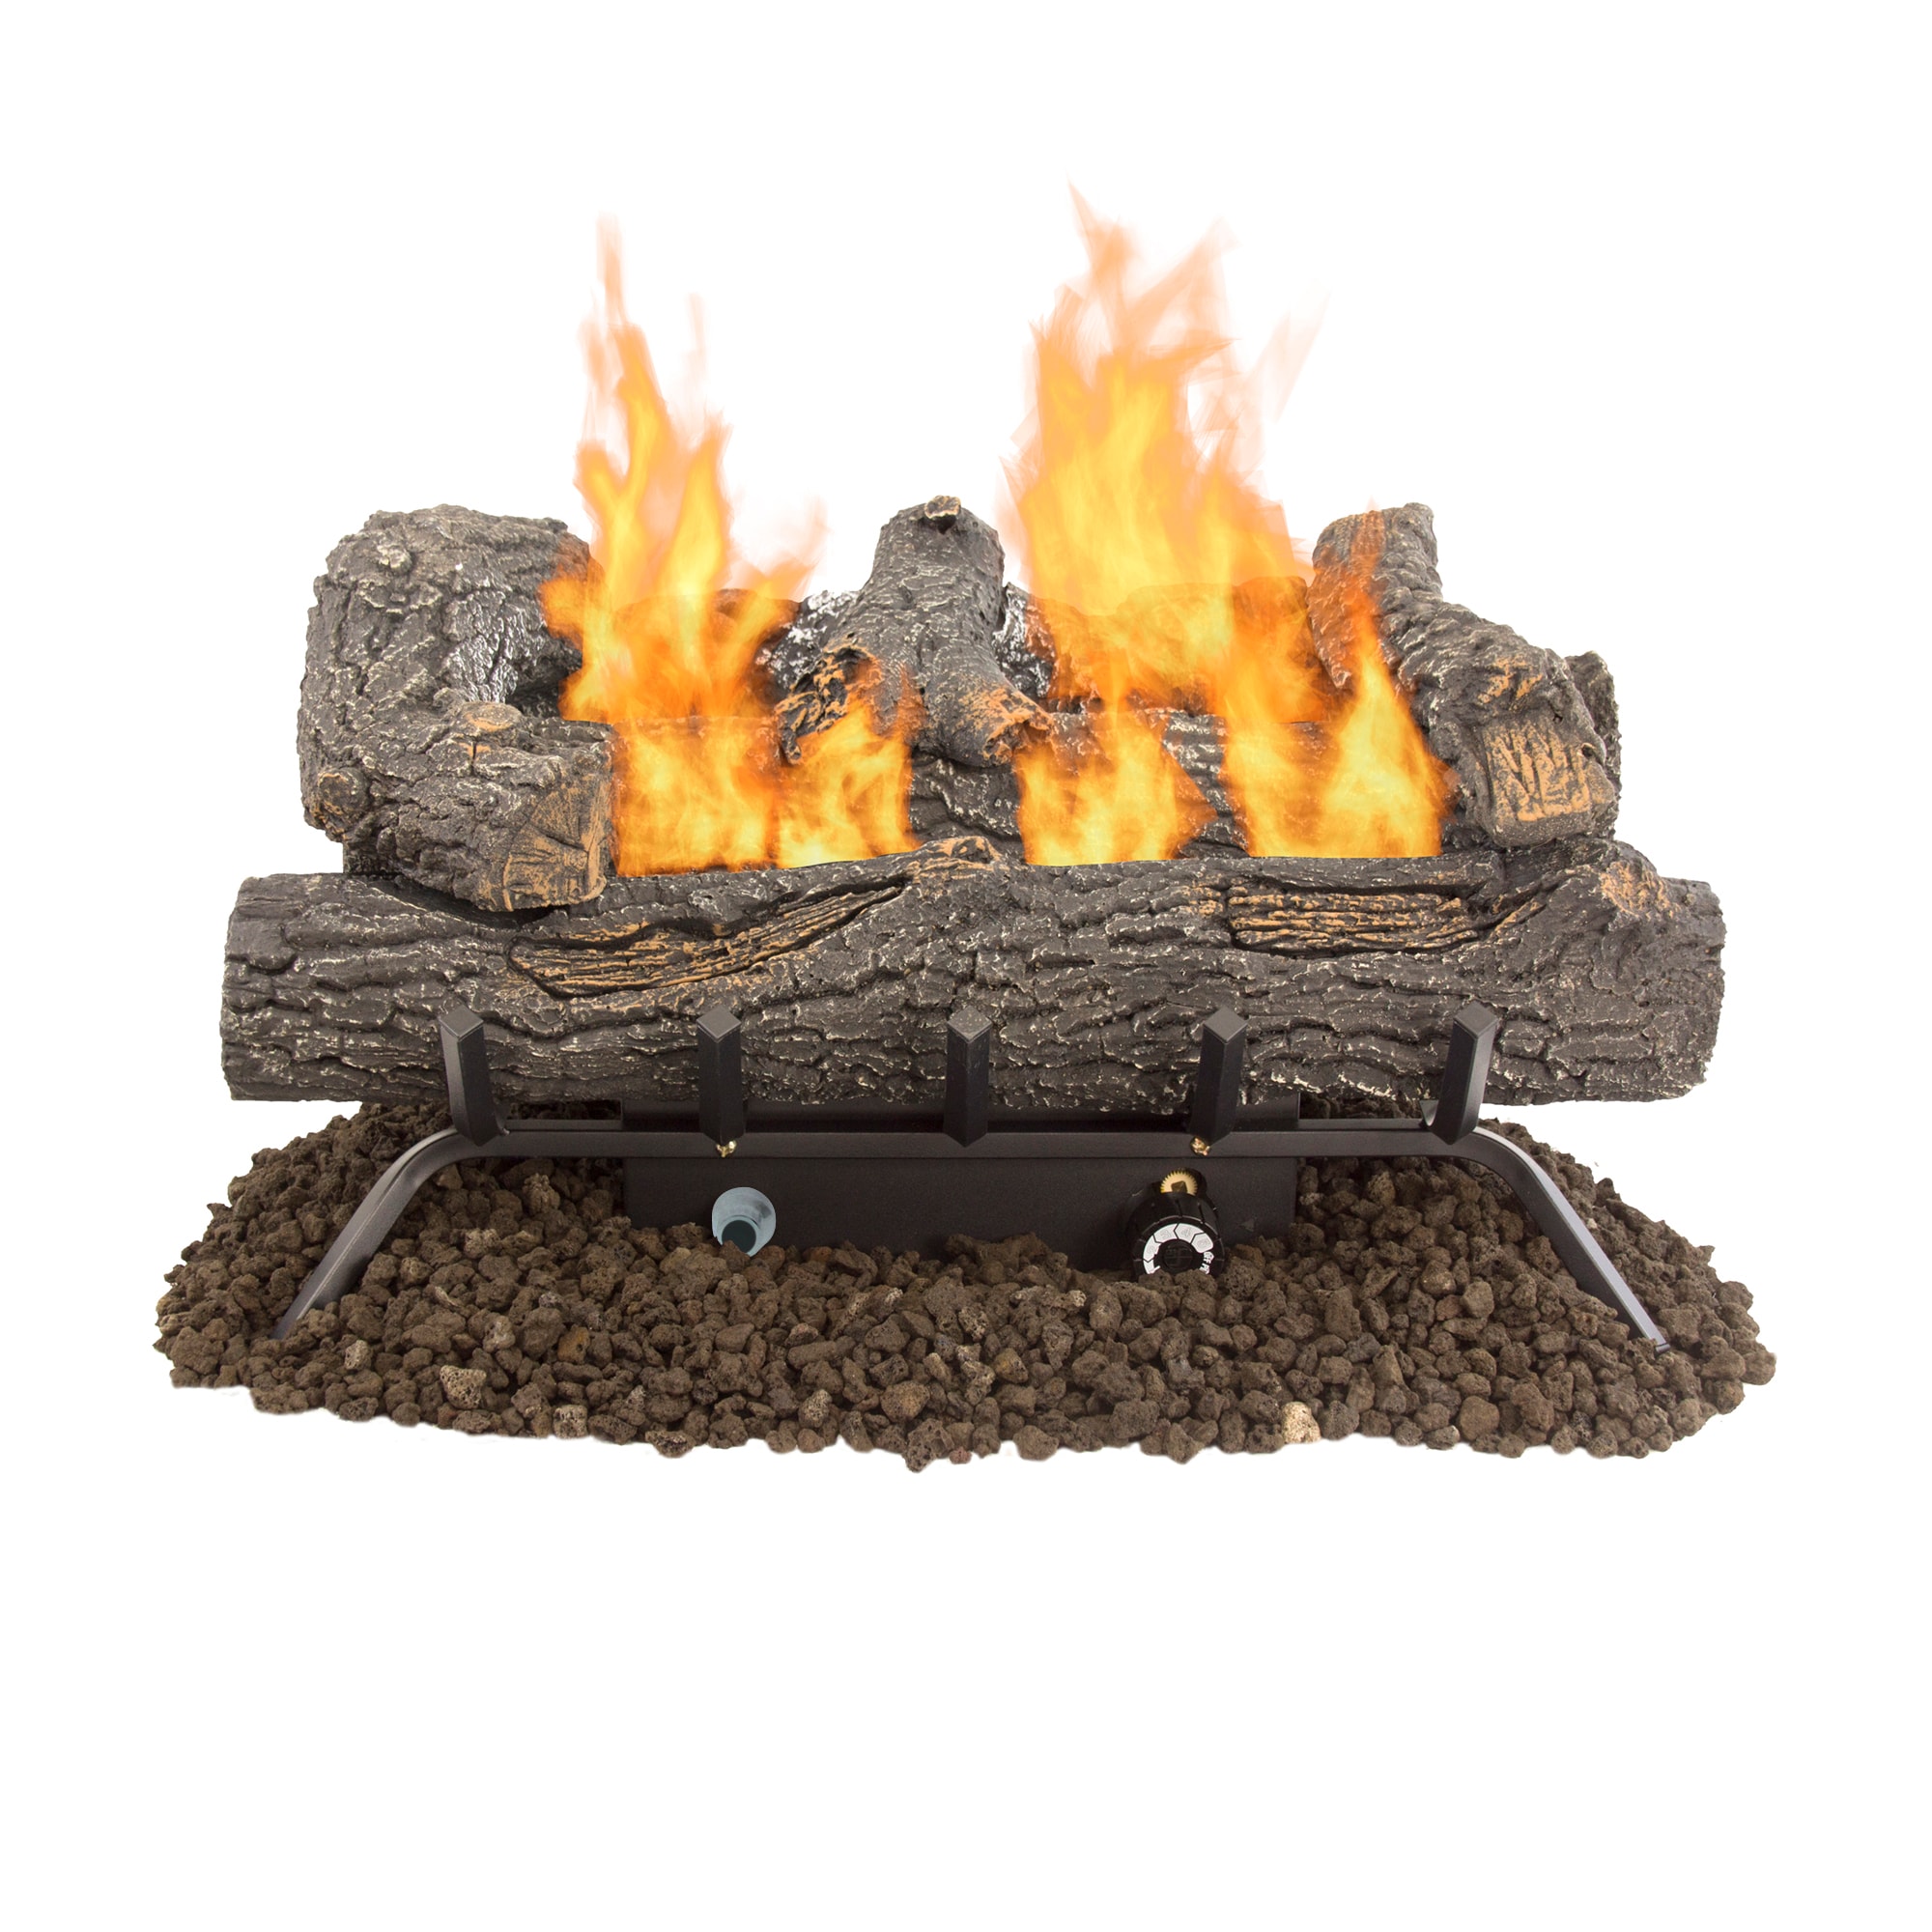 Vented Design Log Set 24-Inch 7-Pcs Natural Gas Decorative Fireplace Cement Logs 